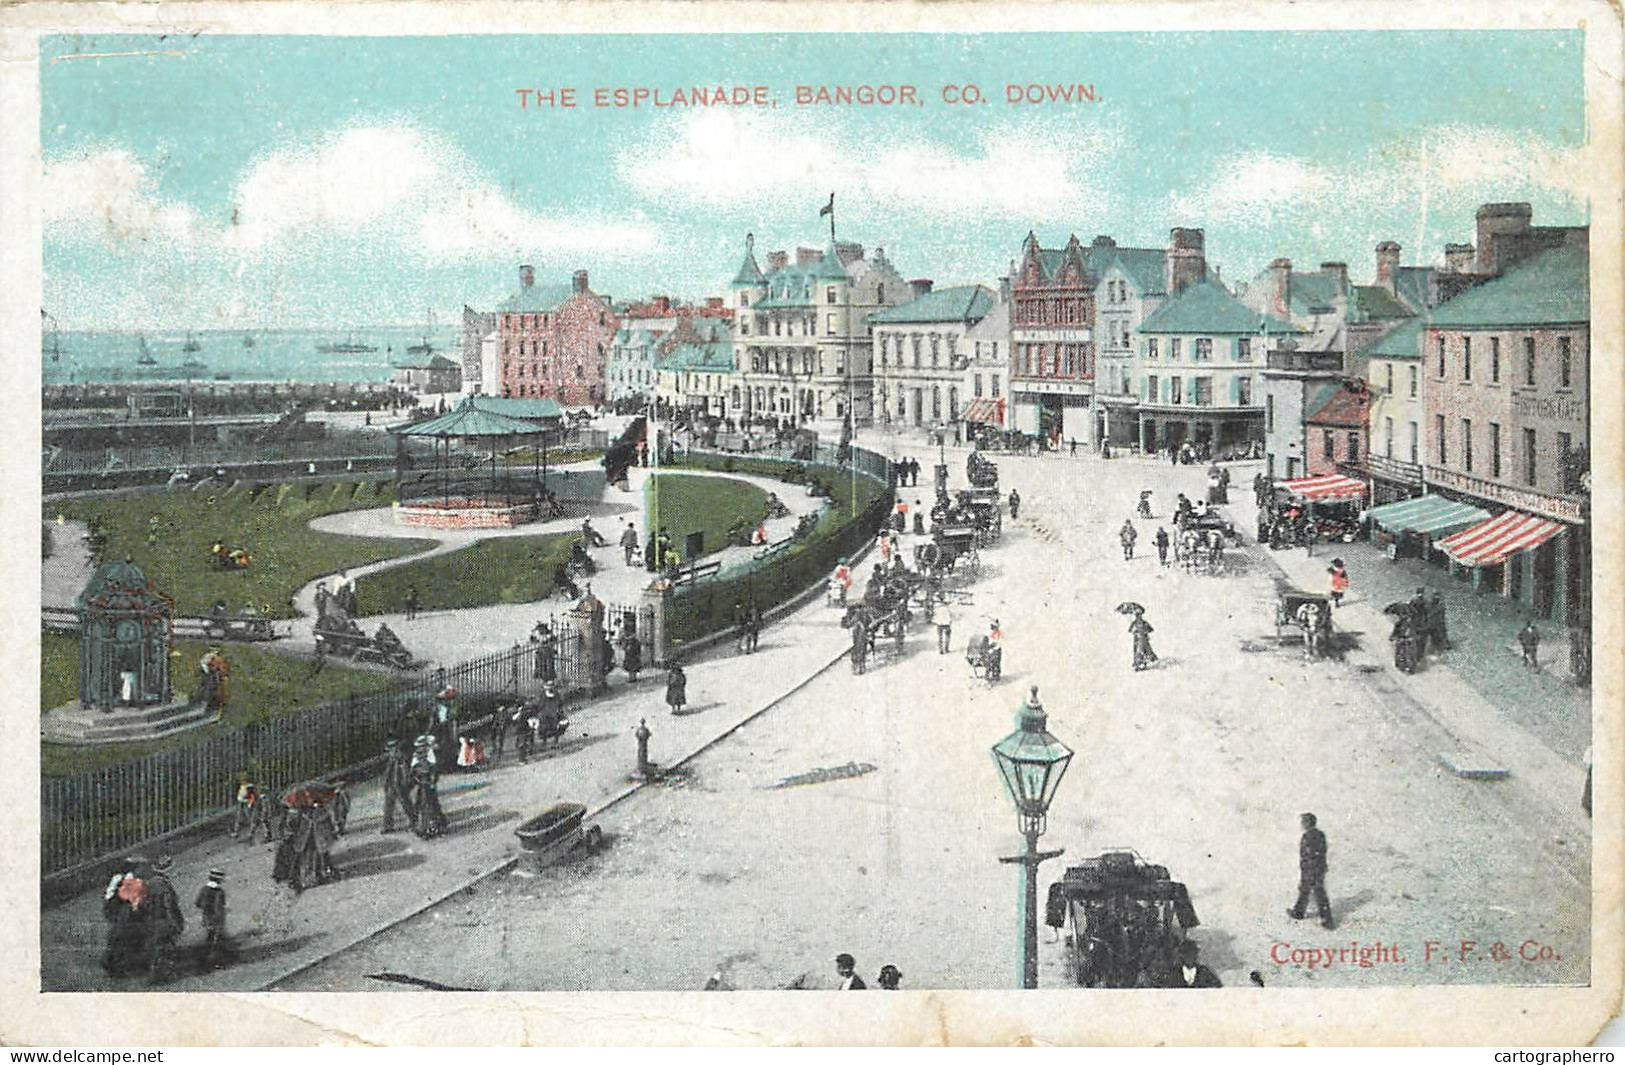 Northern Ireland Bangor Co. Down - The Esplanade - Down